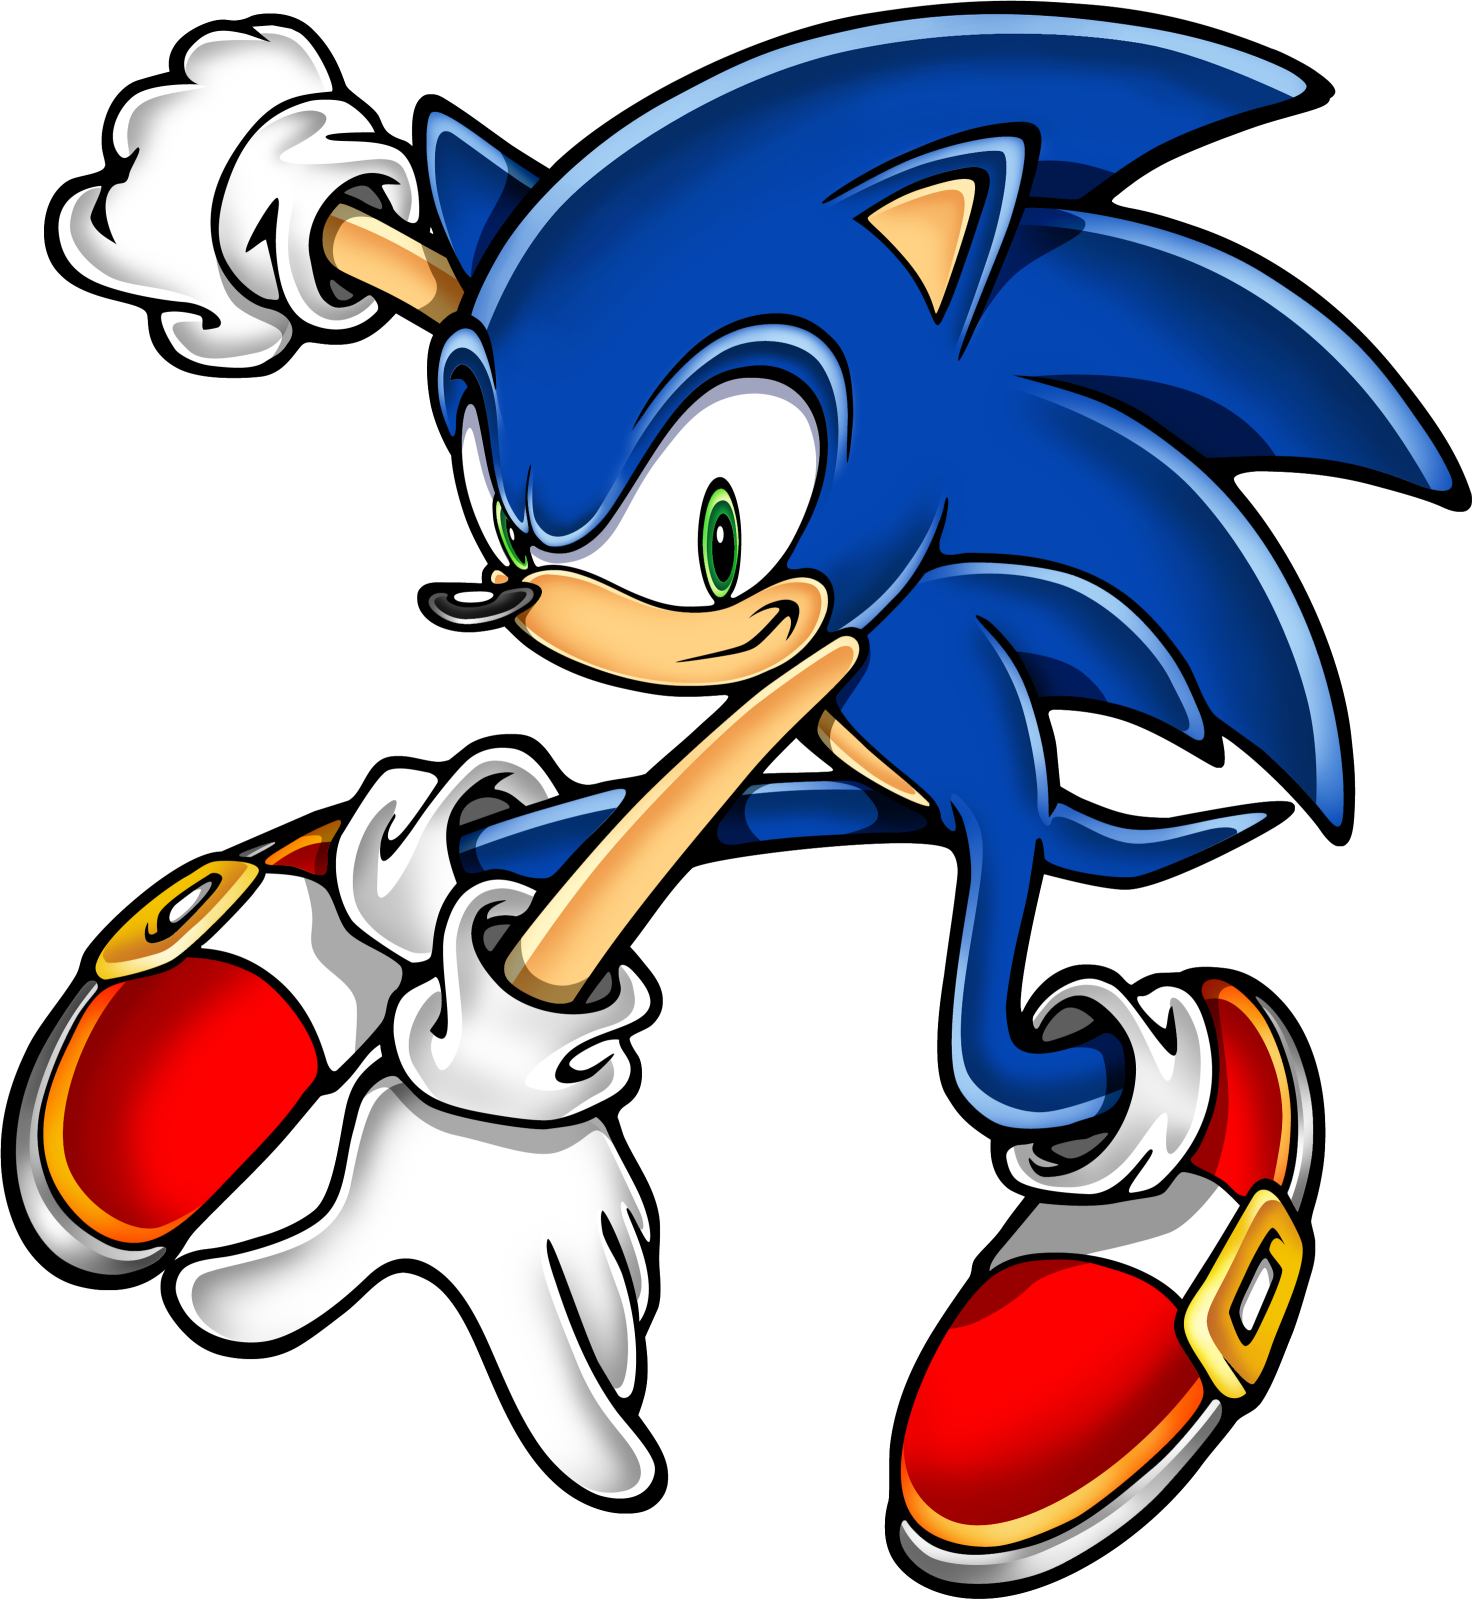 Sonic Art Assets DVD - Sonic The Hedgehog - 21.png